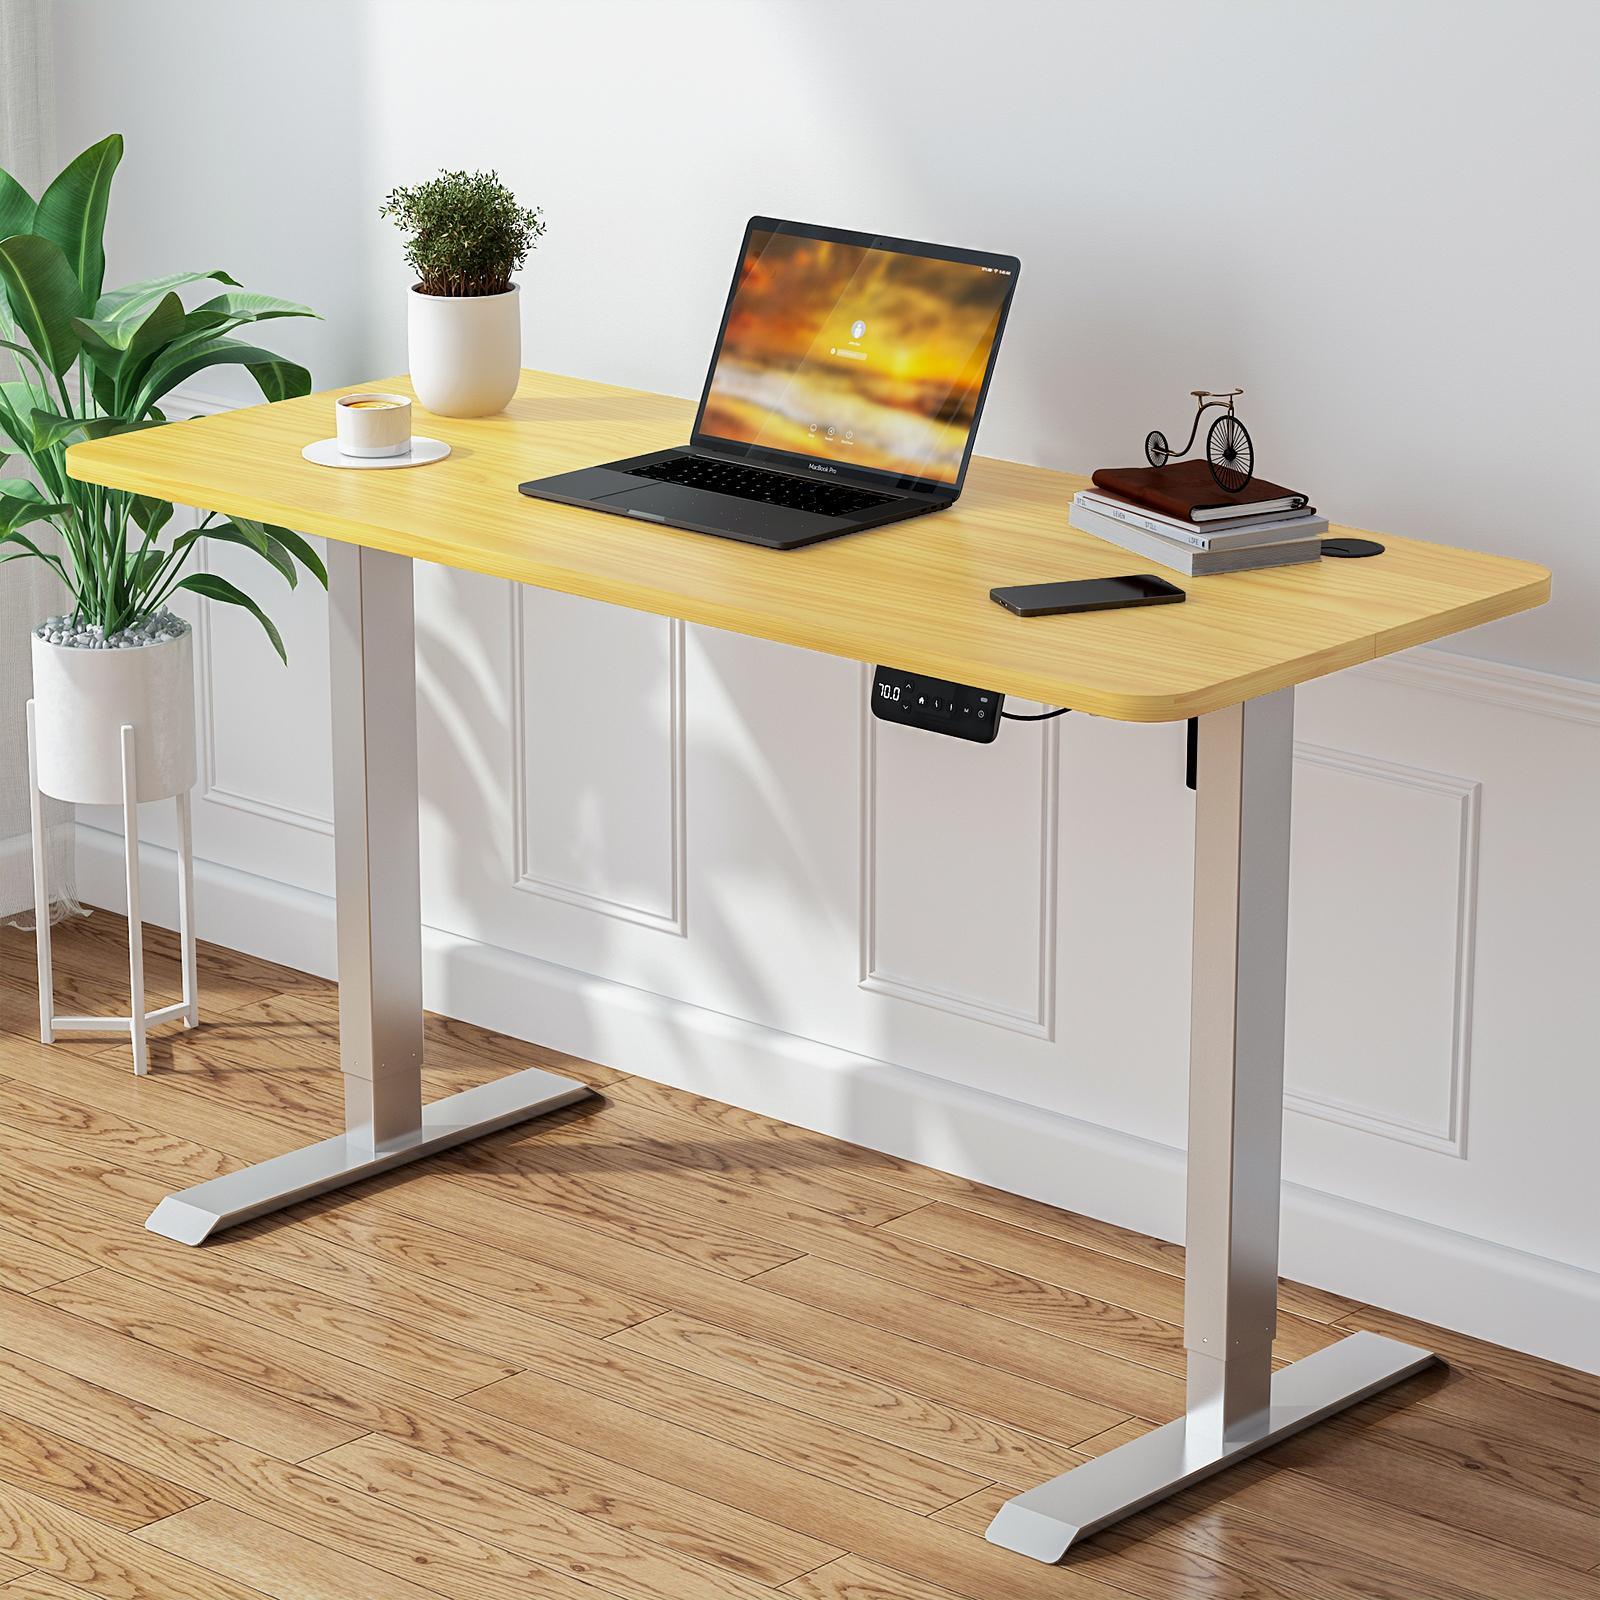 Advwin Electric Standing Desk Adjustable Height Oak Color 140cm